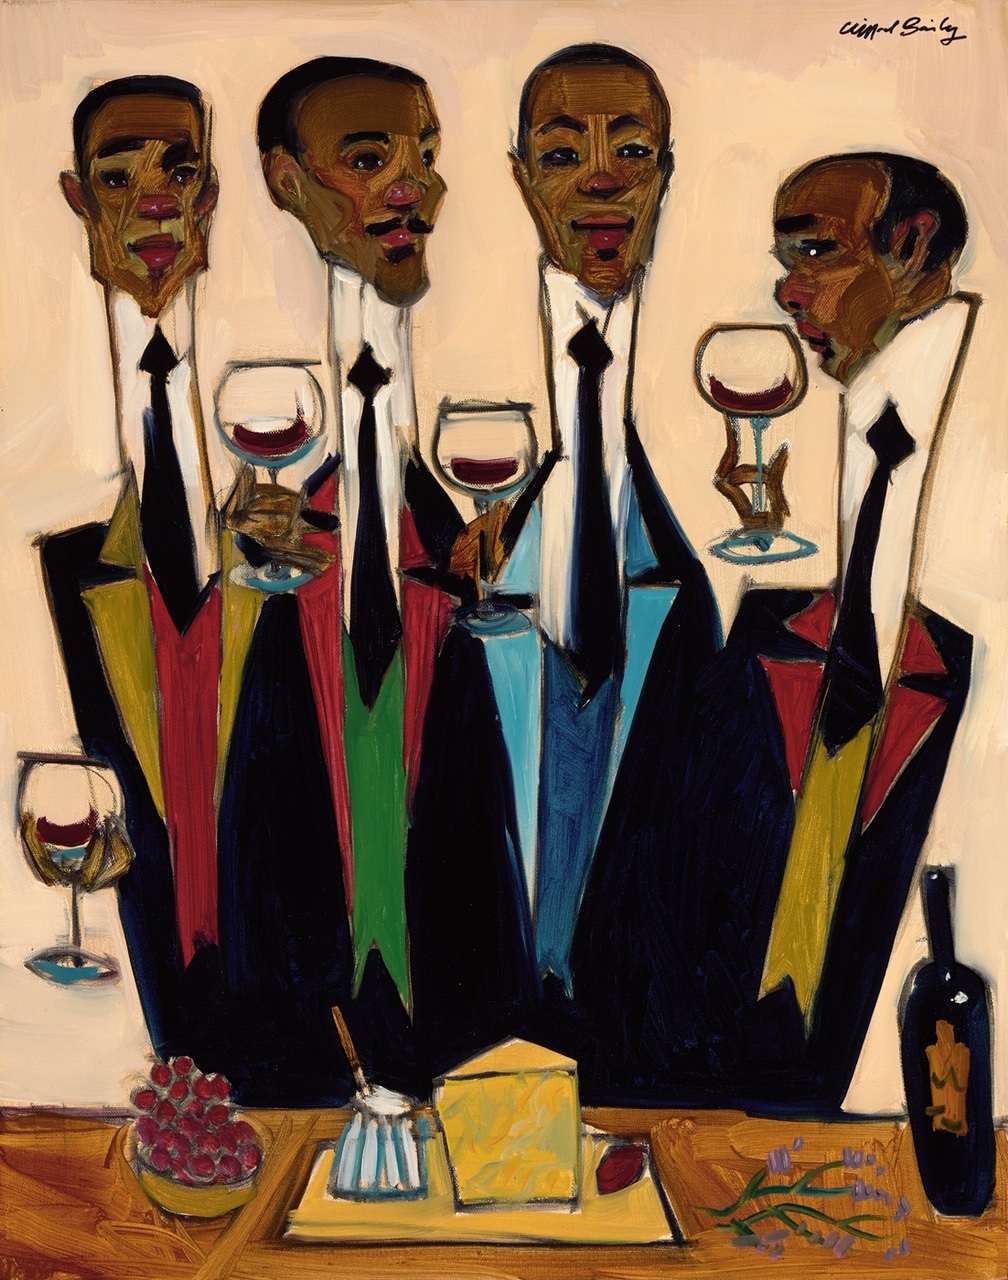 Clifford Bailey Fine Art, Supper Club